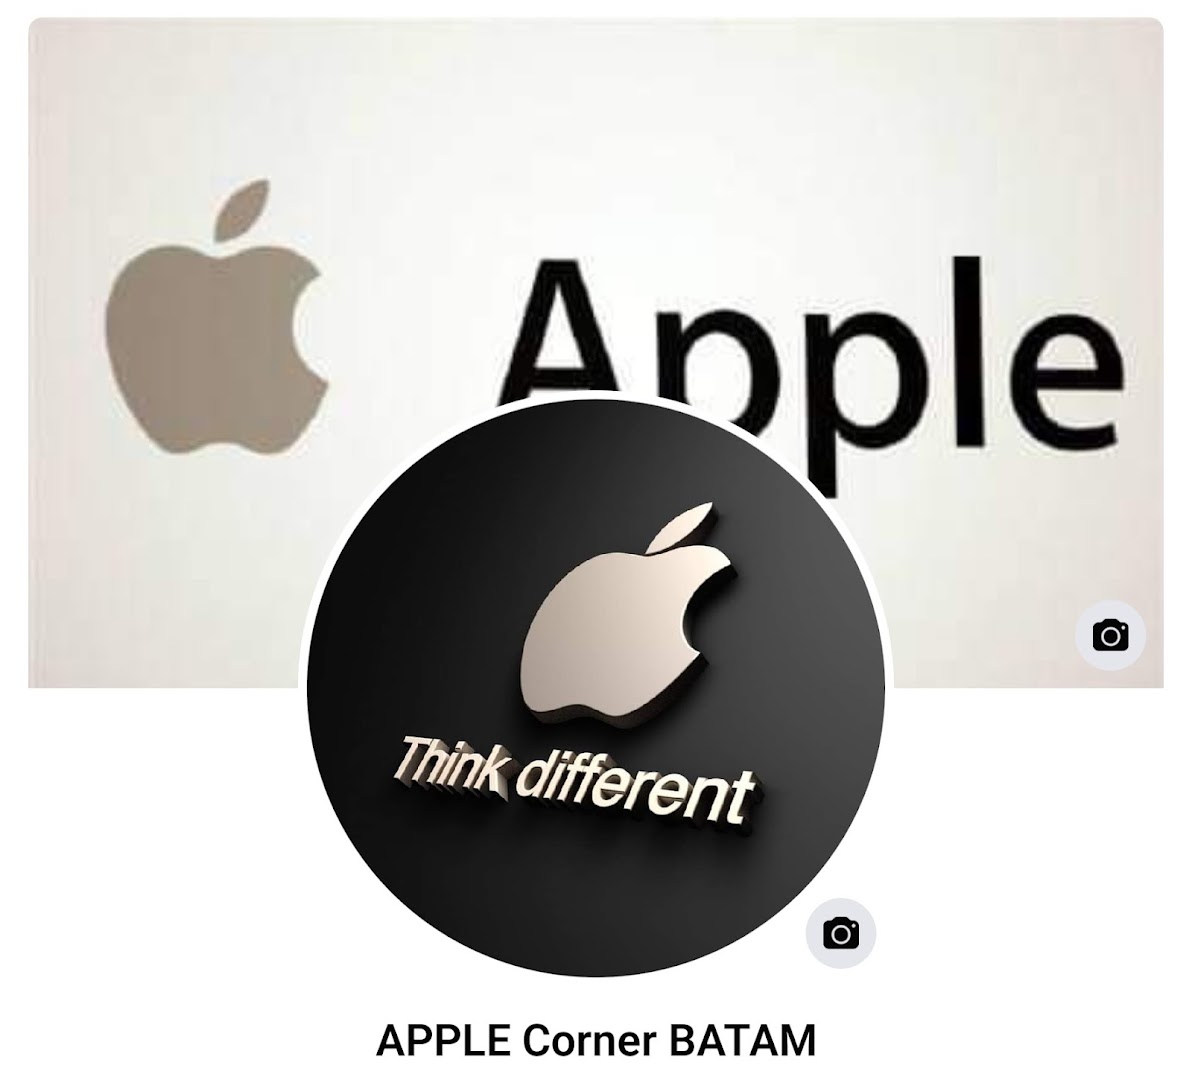 Apple Corner Batam Photo